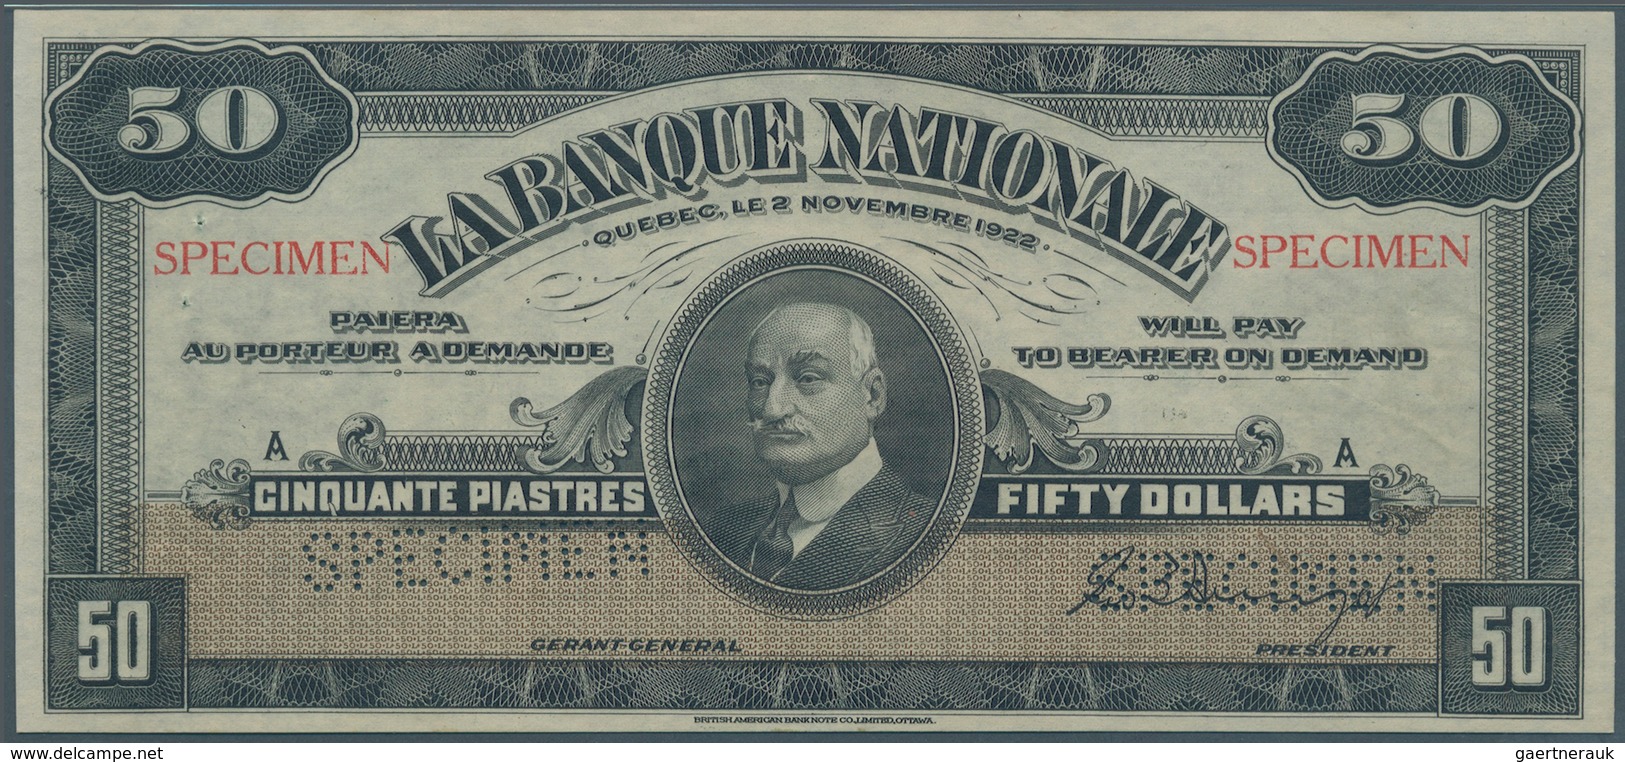 Canada: La Banque Nationale 50 Dollars 1922 SPECIMEN, P.S874s In Excellent Condition, Just Slightly - Kanada